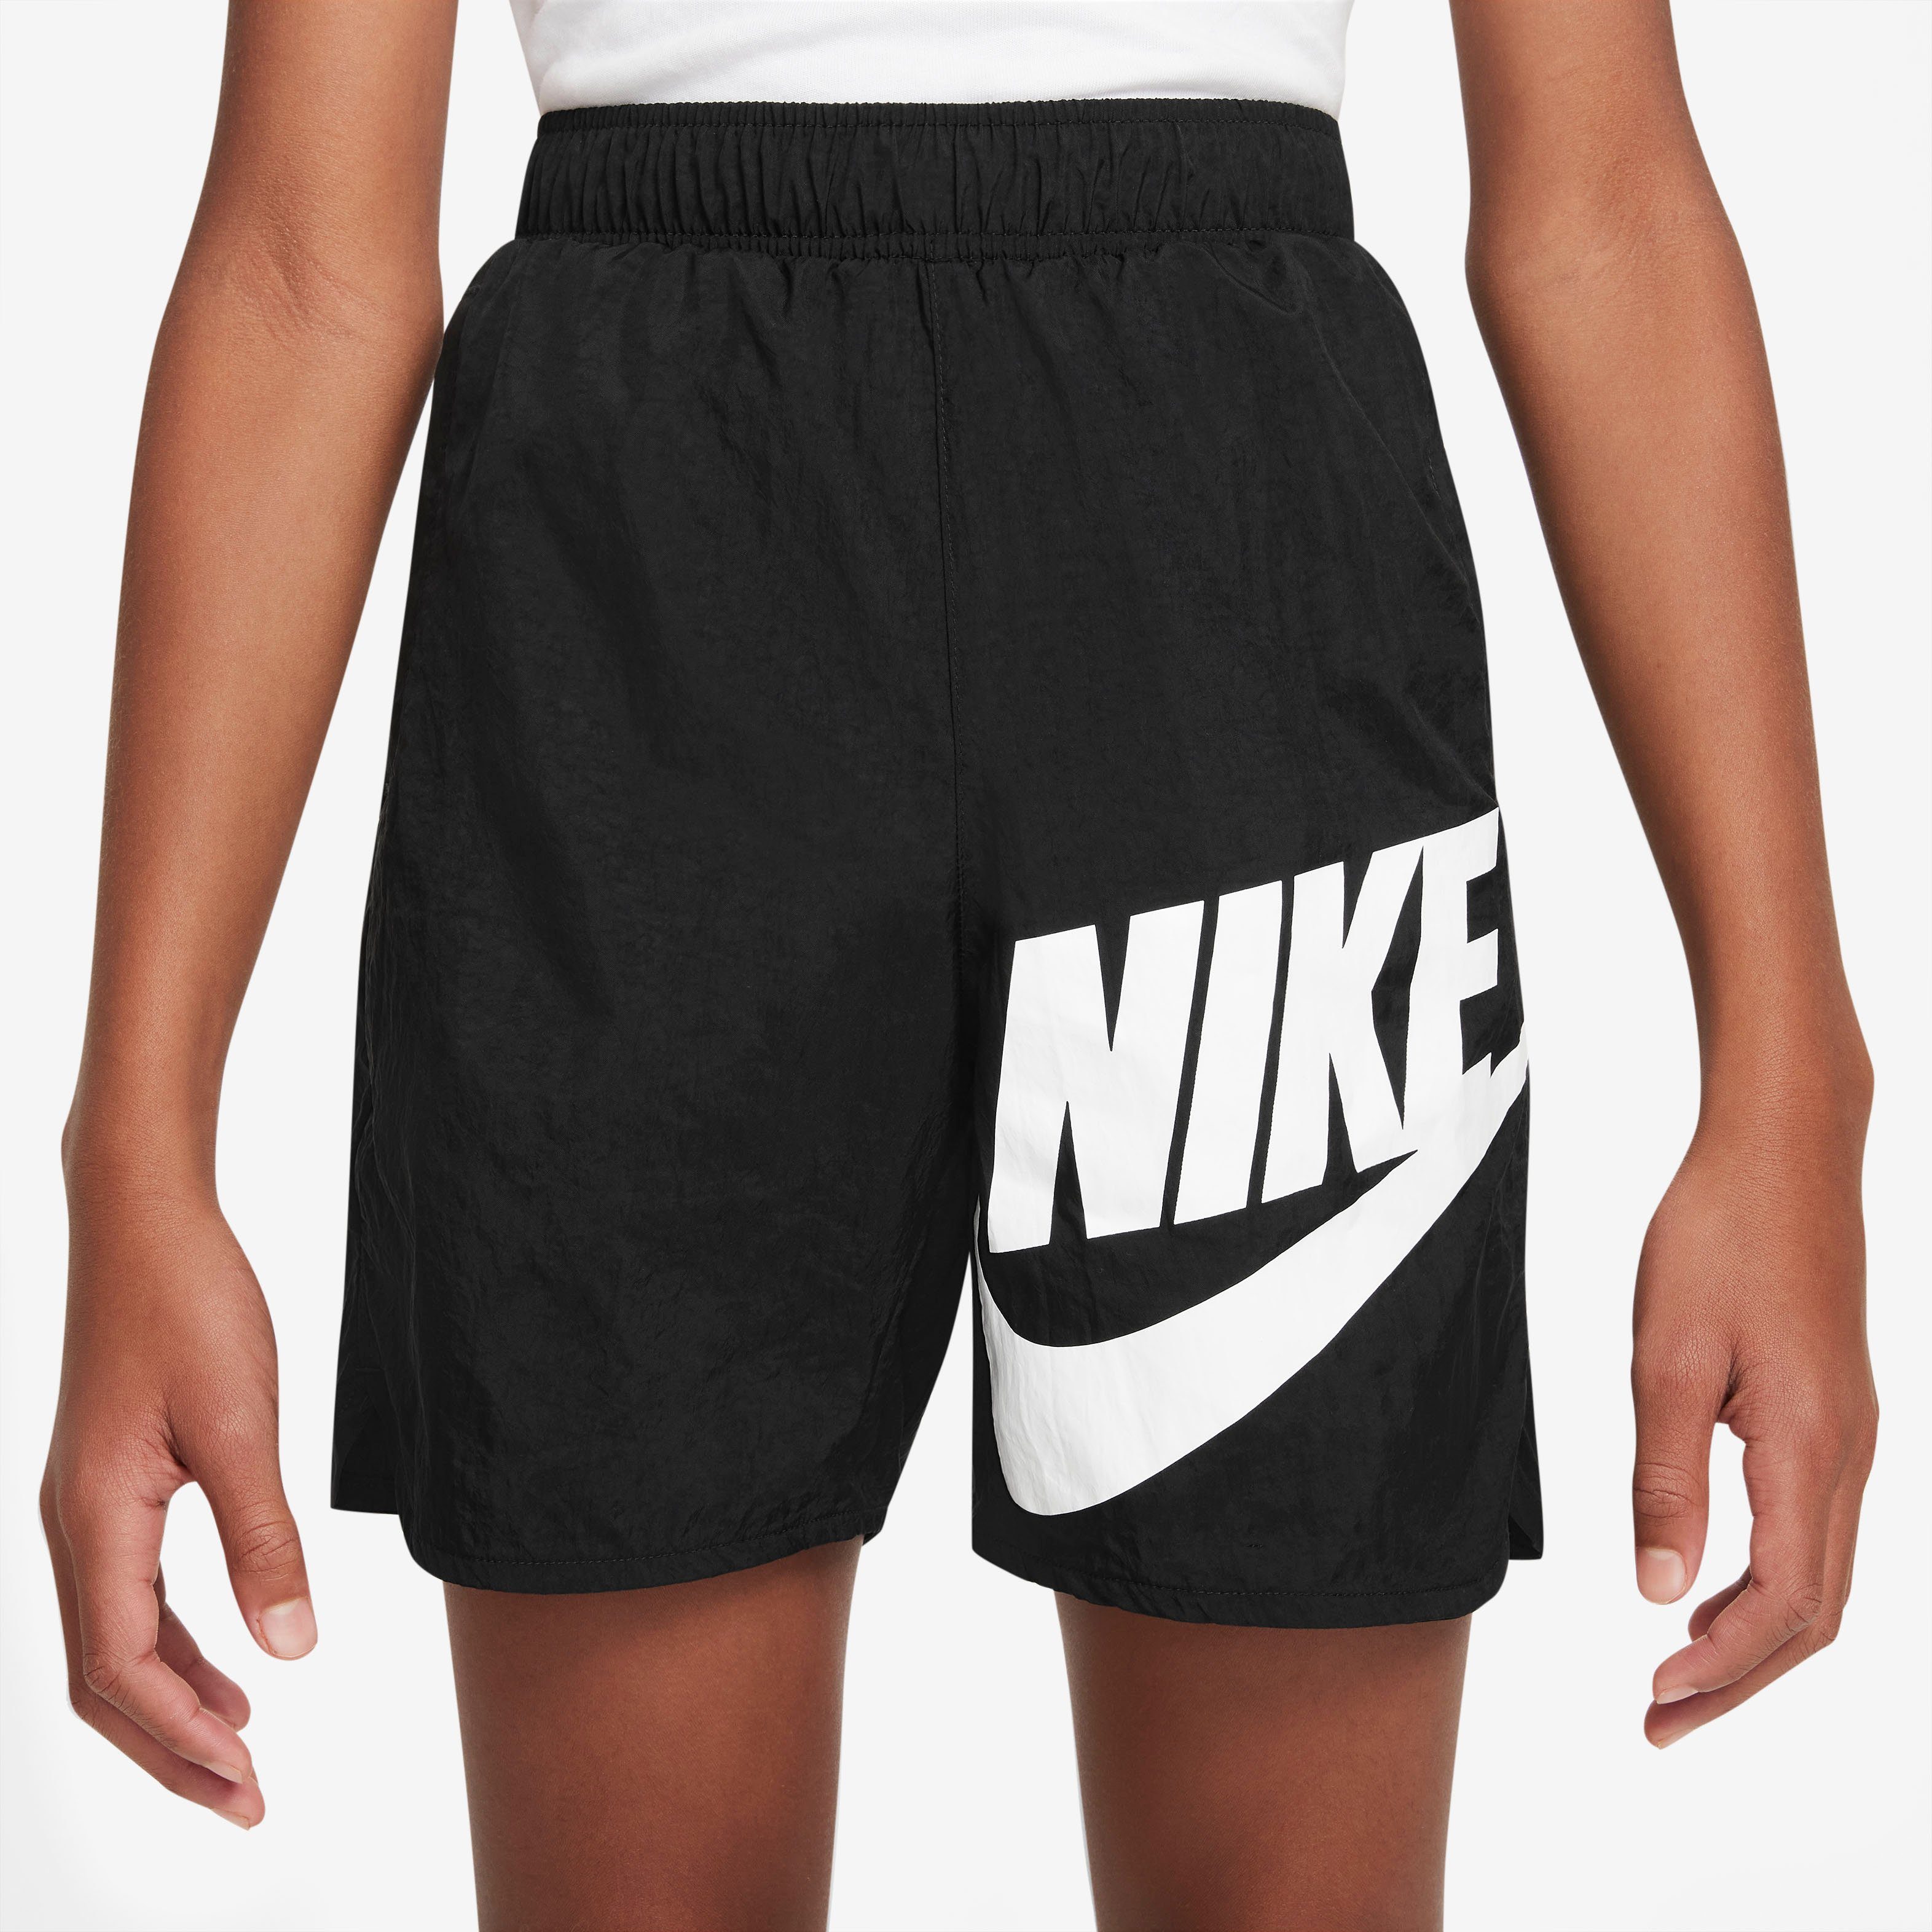 Nike Sportswear Shorts (Boys) schwarz Woven Kids' Shorts Big